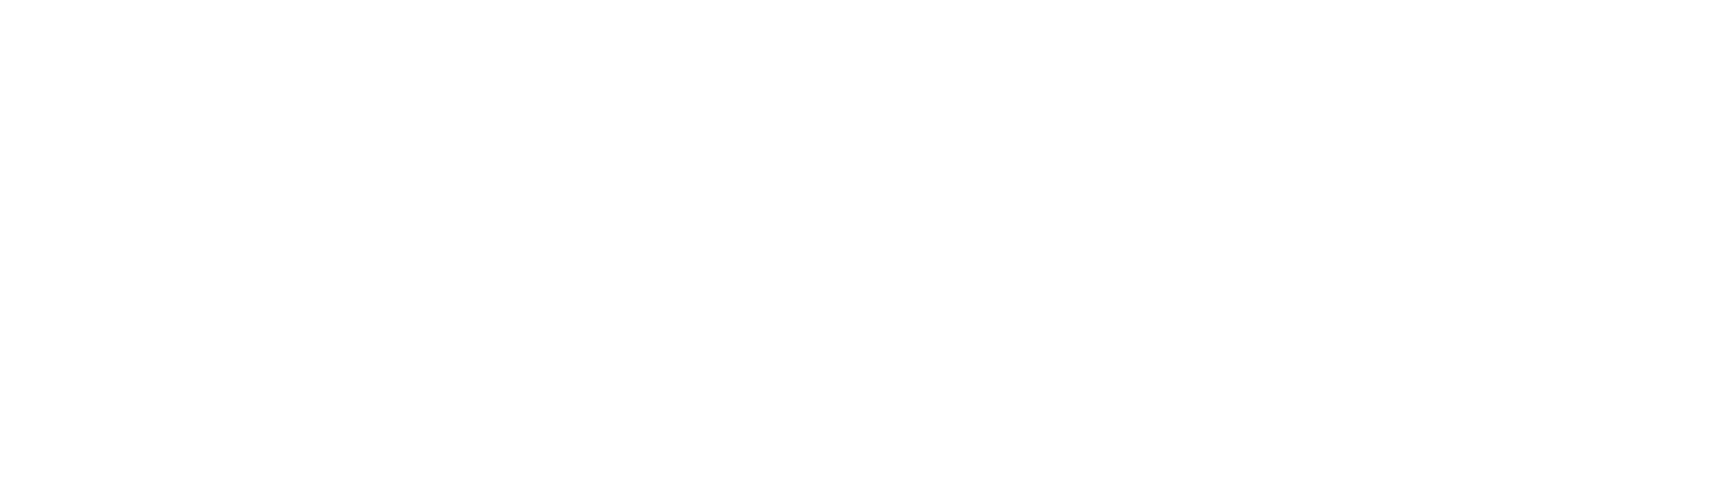 Mission 05 Logo